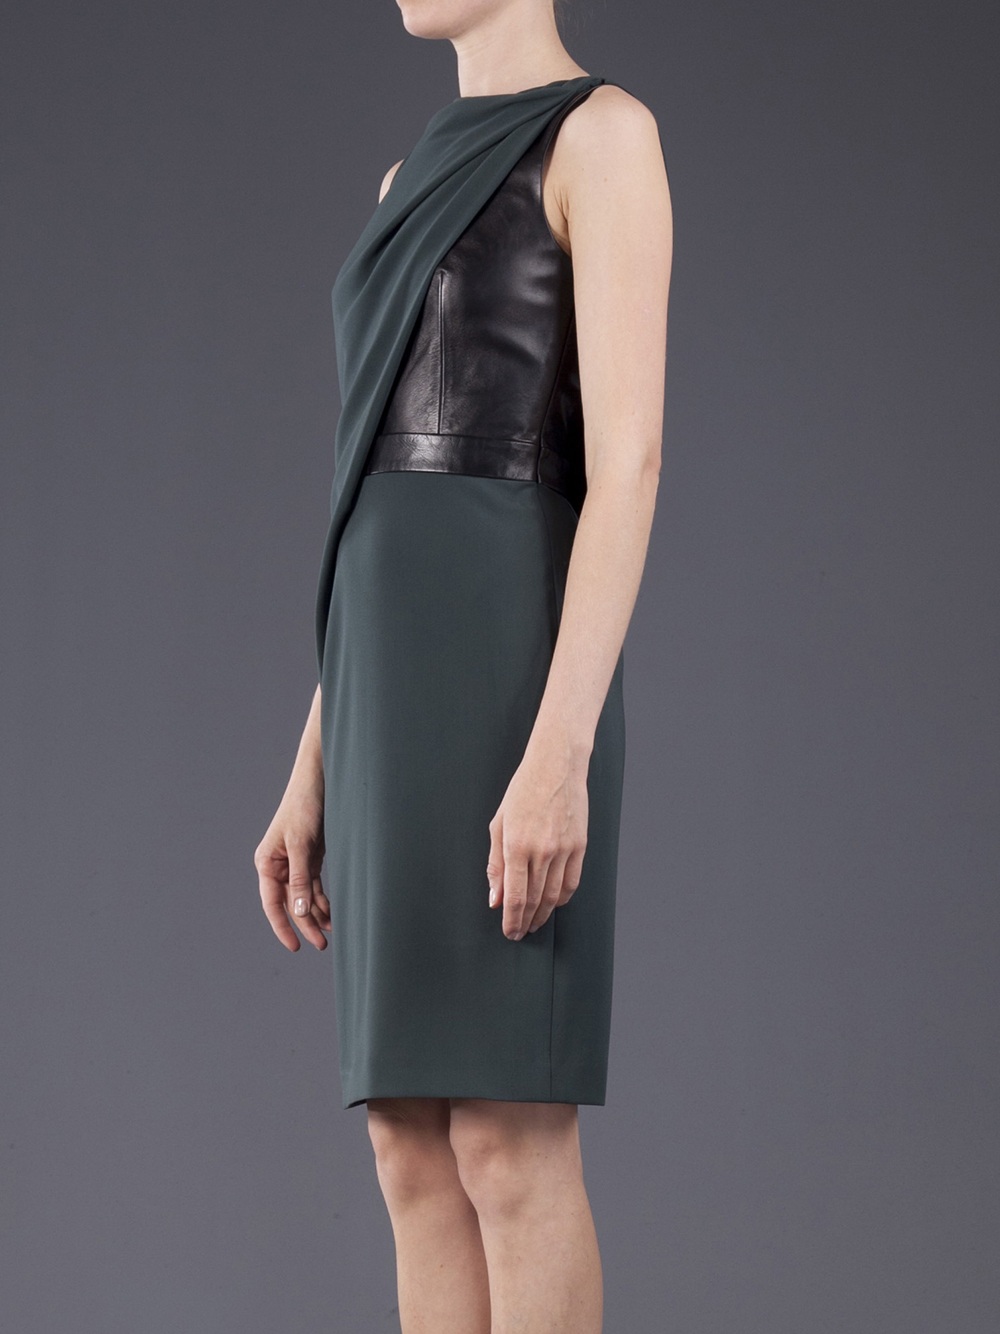 Lyst - Alexander Wang Asymmetric Draped Dress in Black